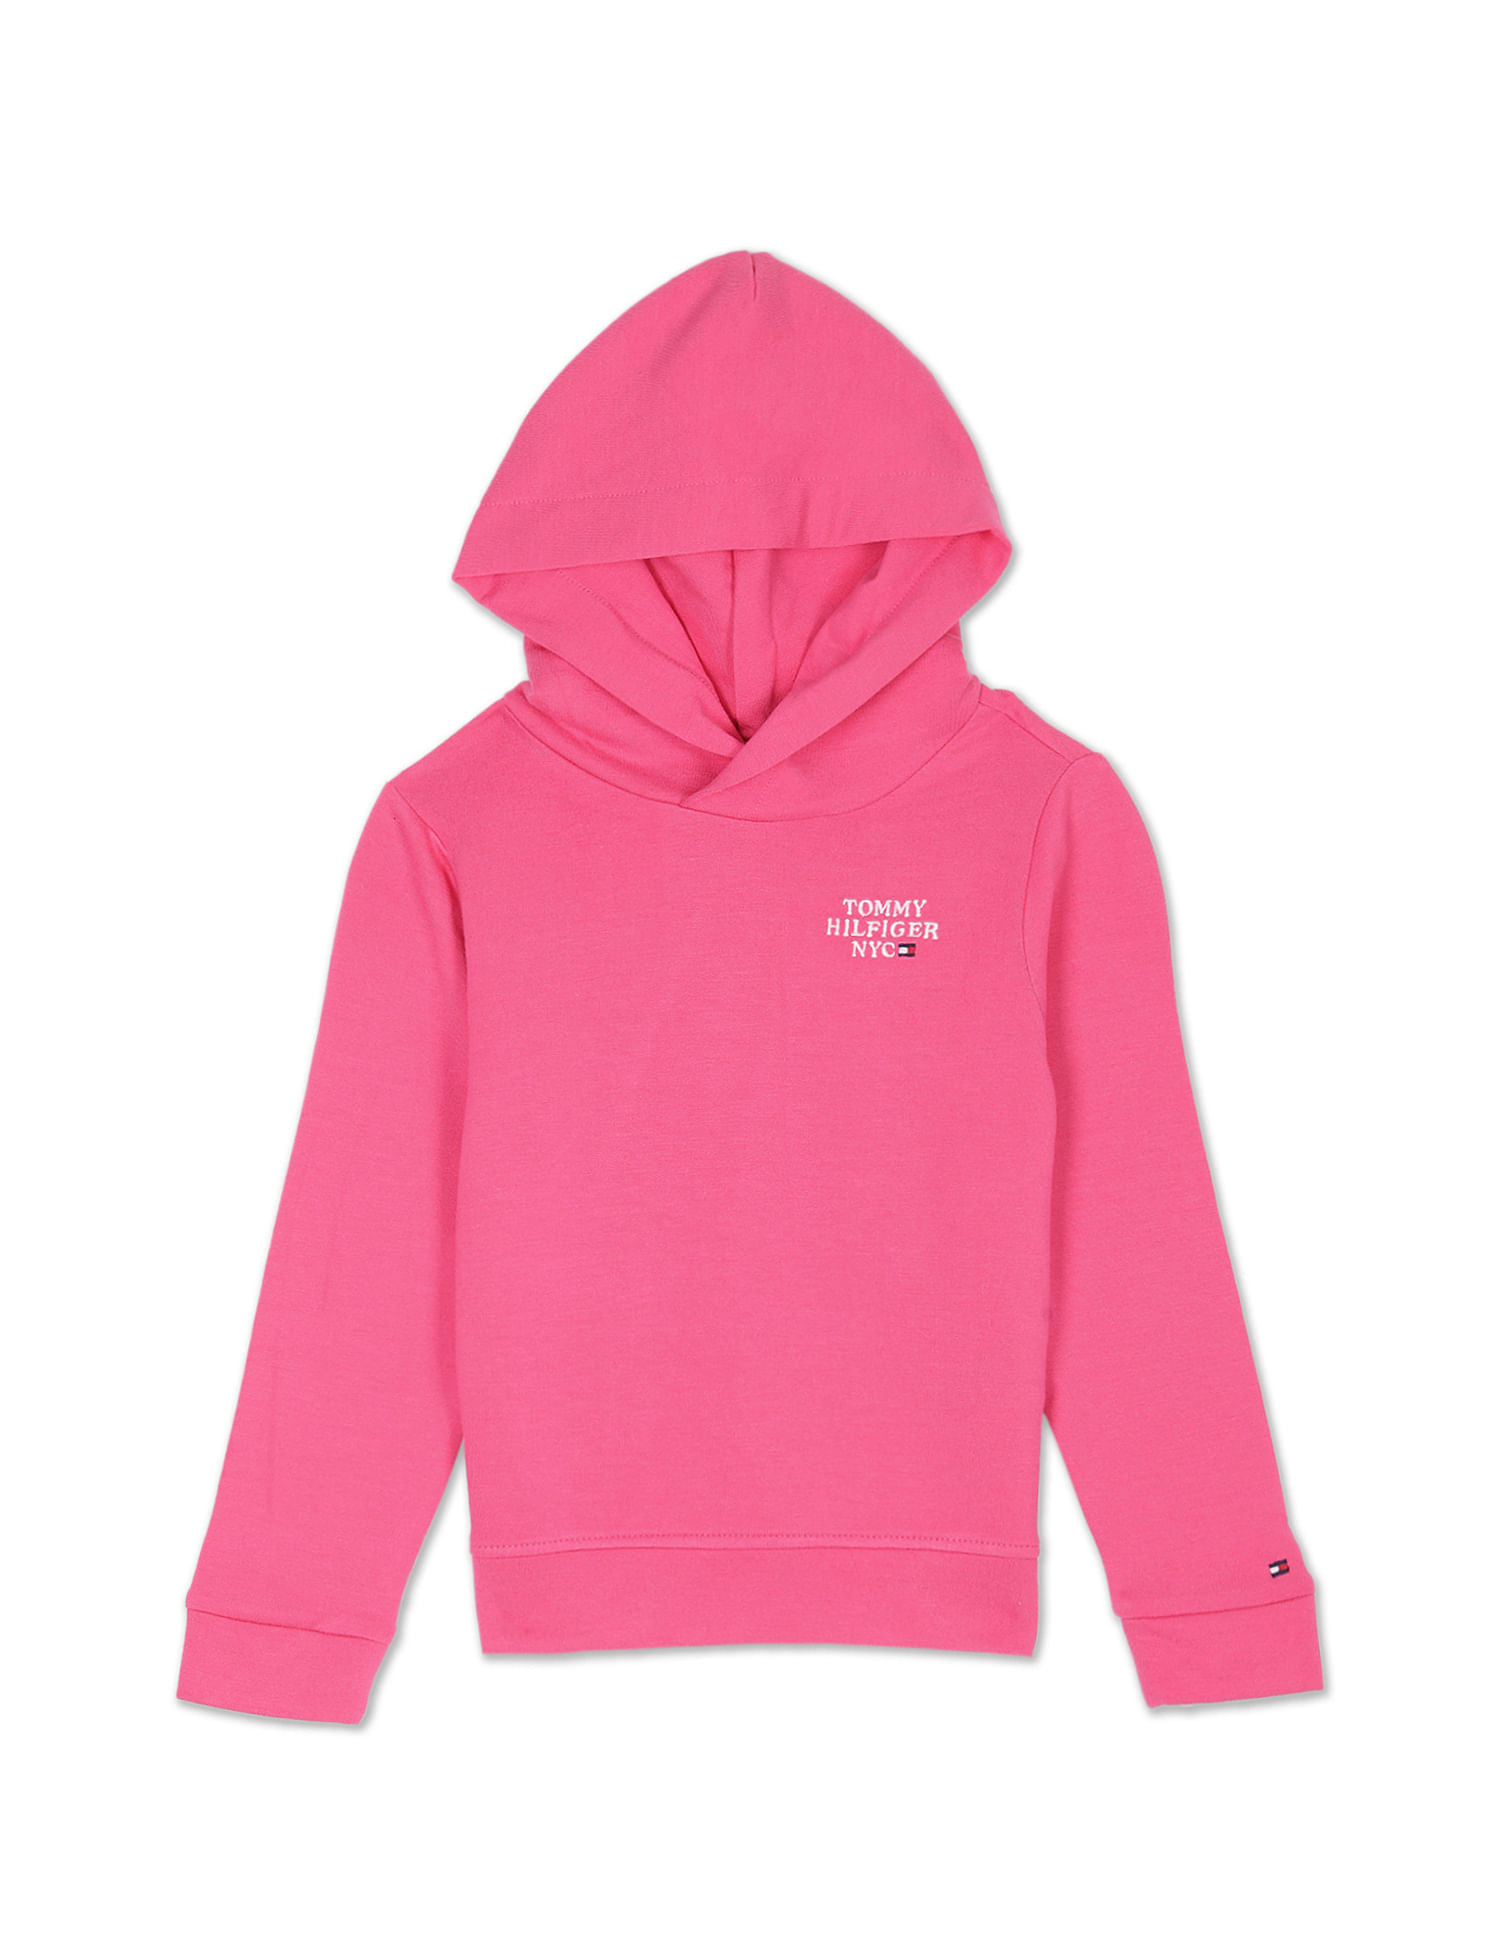 Buy Tommy Hilfiger Kids Girls Pink Embroidered Logo Hooded Solid Sweatshirt | Sweatshirts